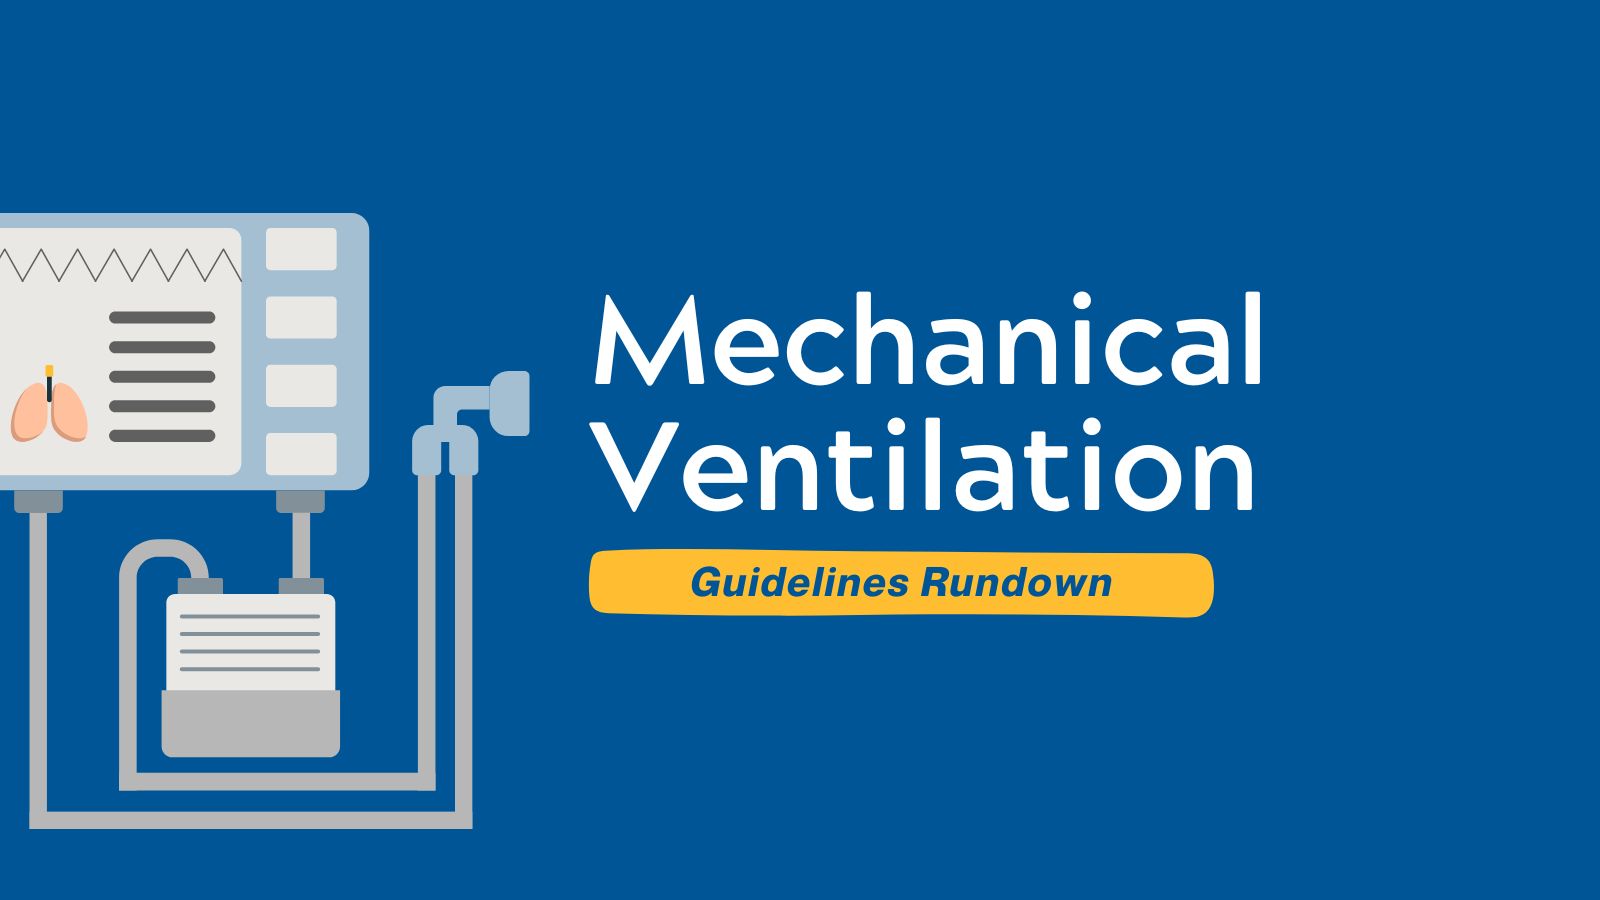 Mechanical Ventilation - Guidelines Rundown